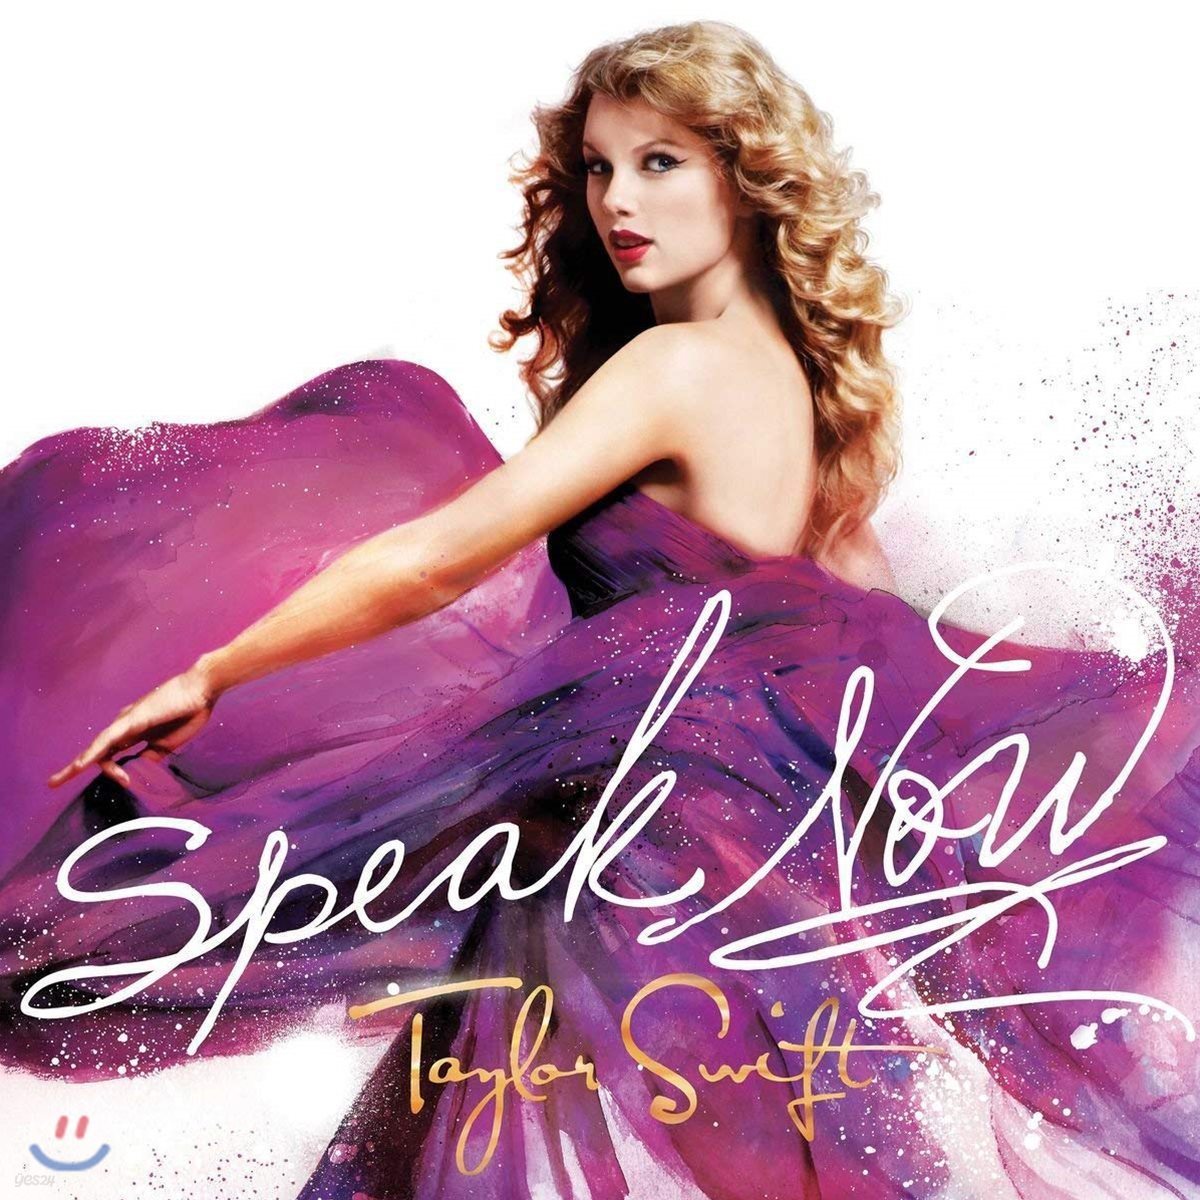 Taylor Swift (테일러 스위프트) - Speak Now 정규 3집 [스모크 컬러 2LP]